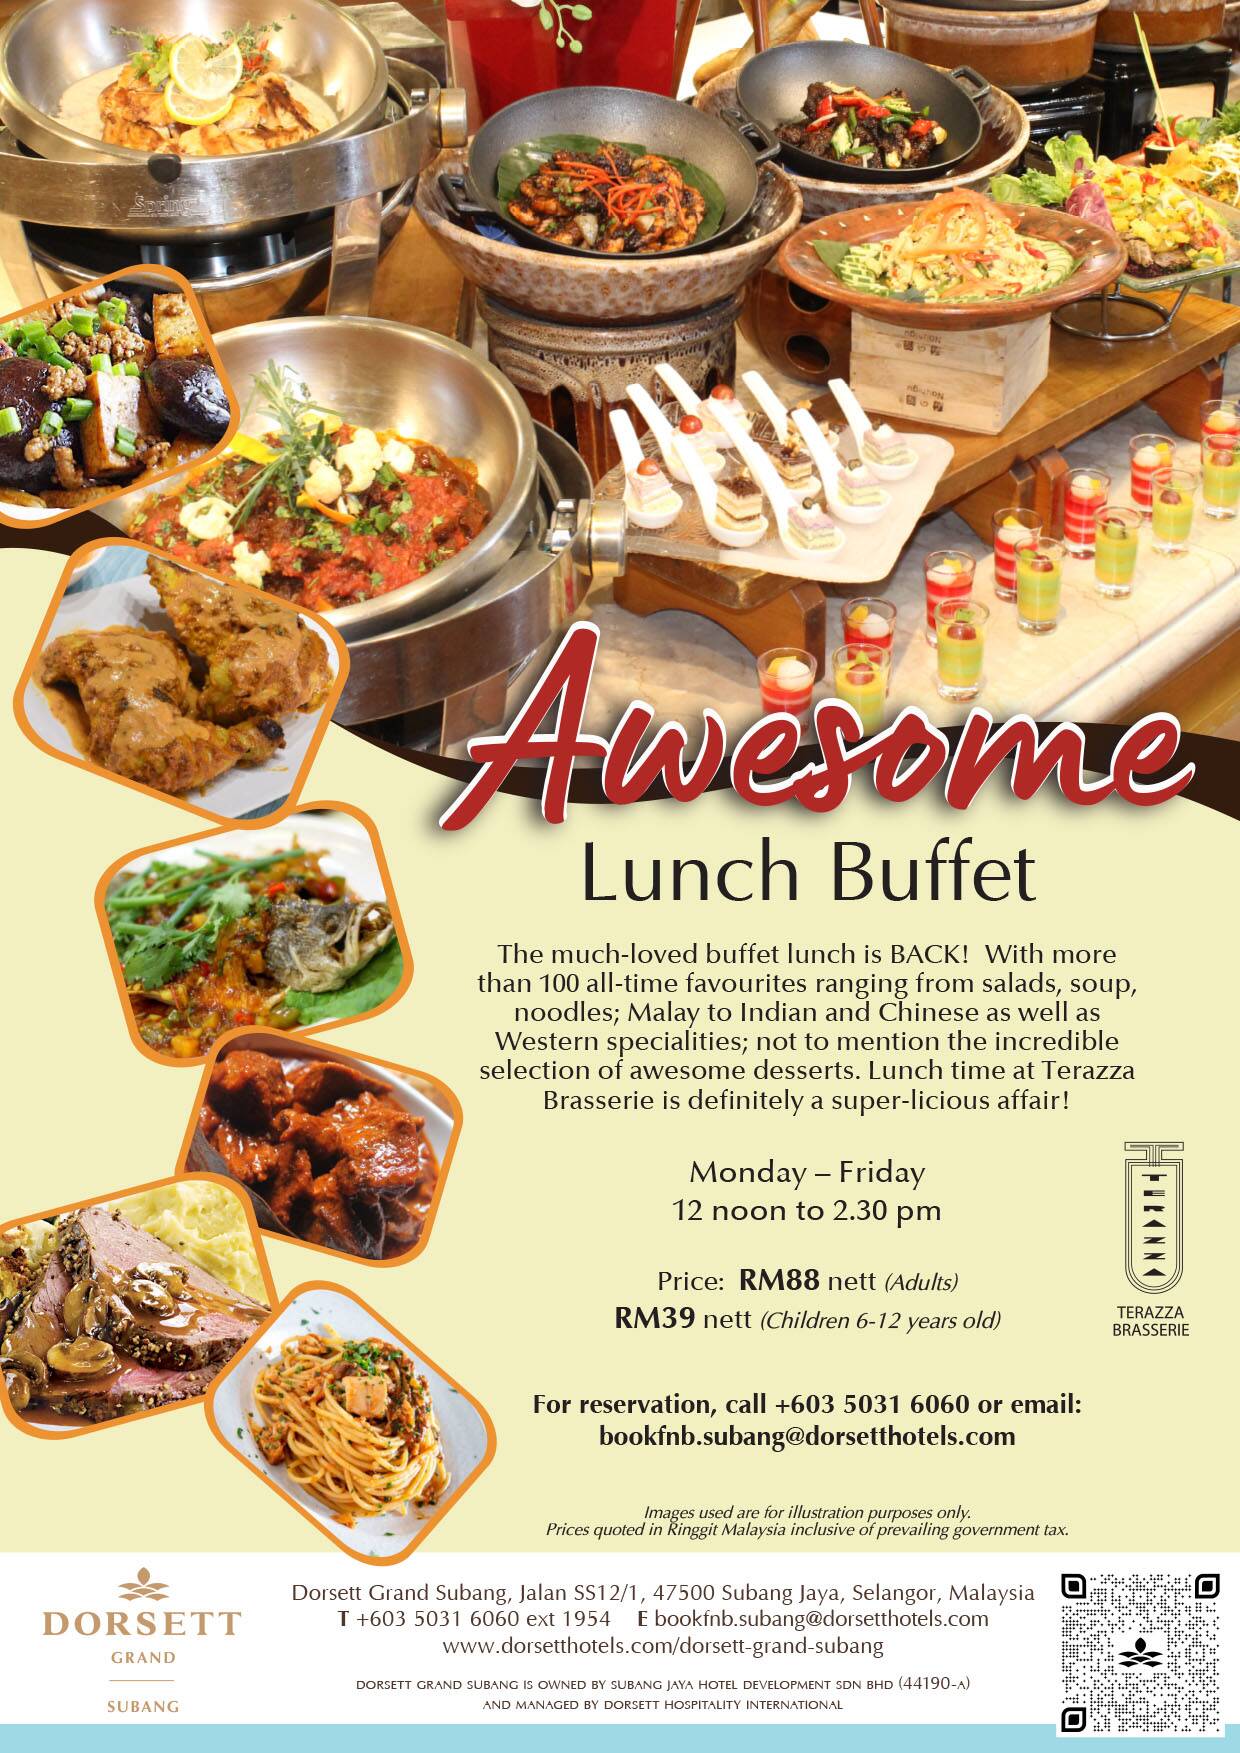 Dorsett Grand Subang | Awesome Lunch Buffet